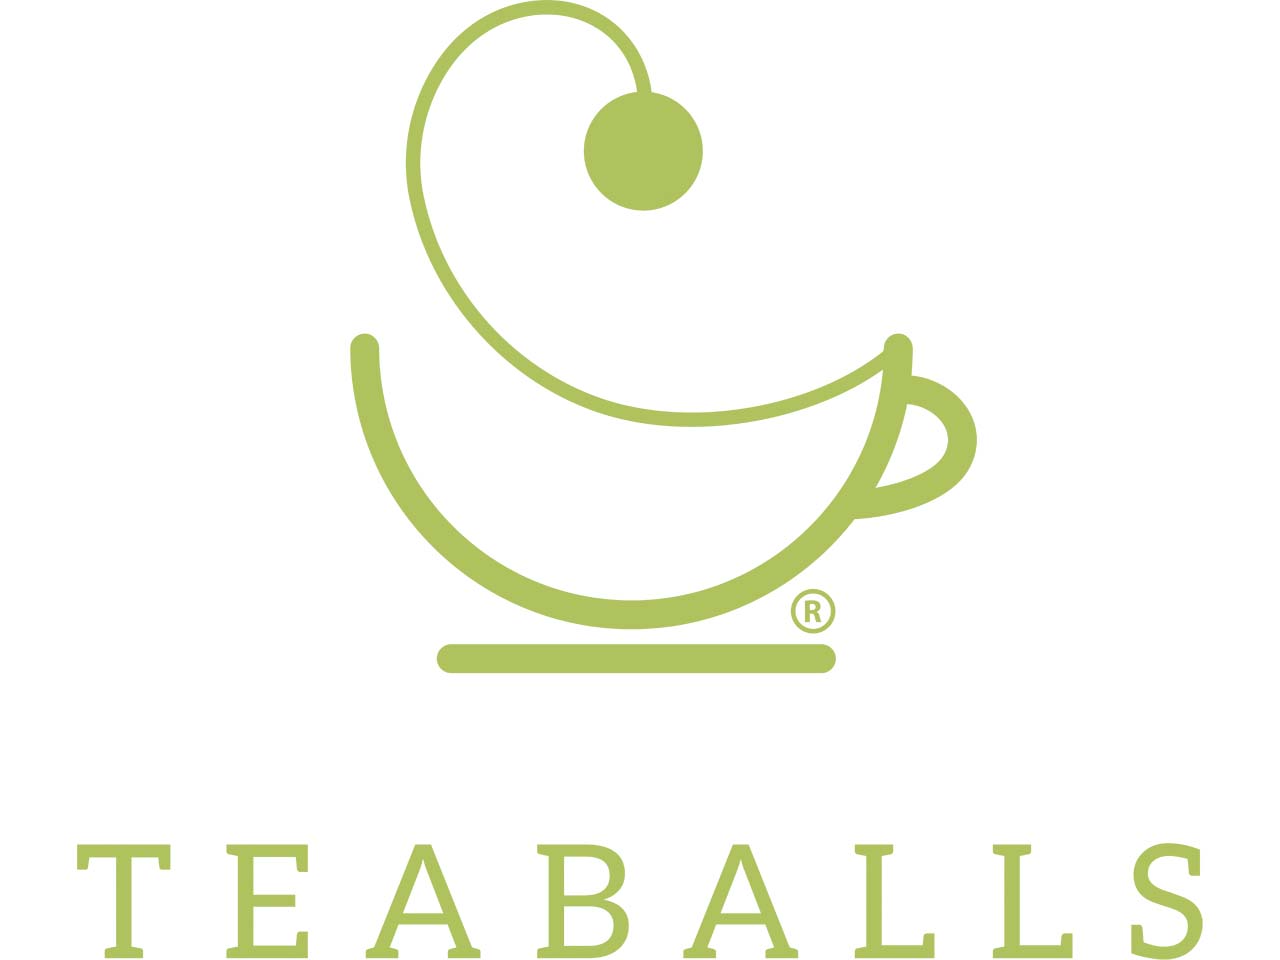 Teaballs